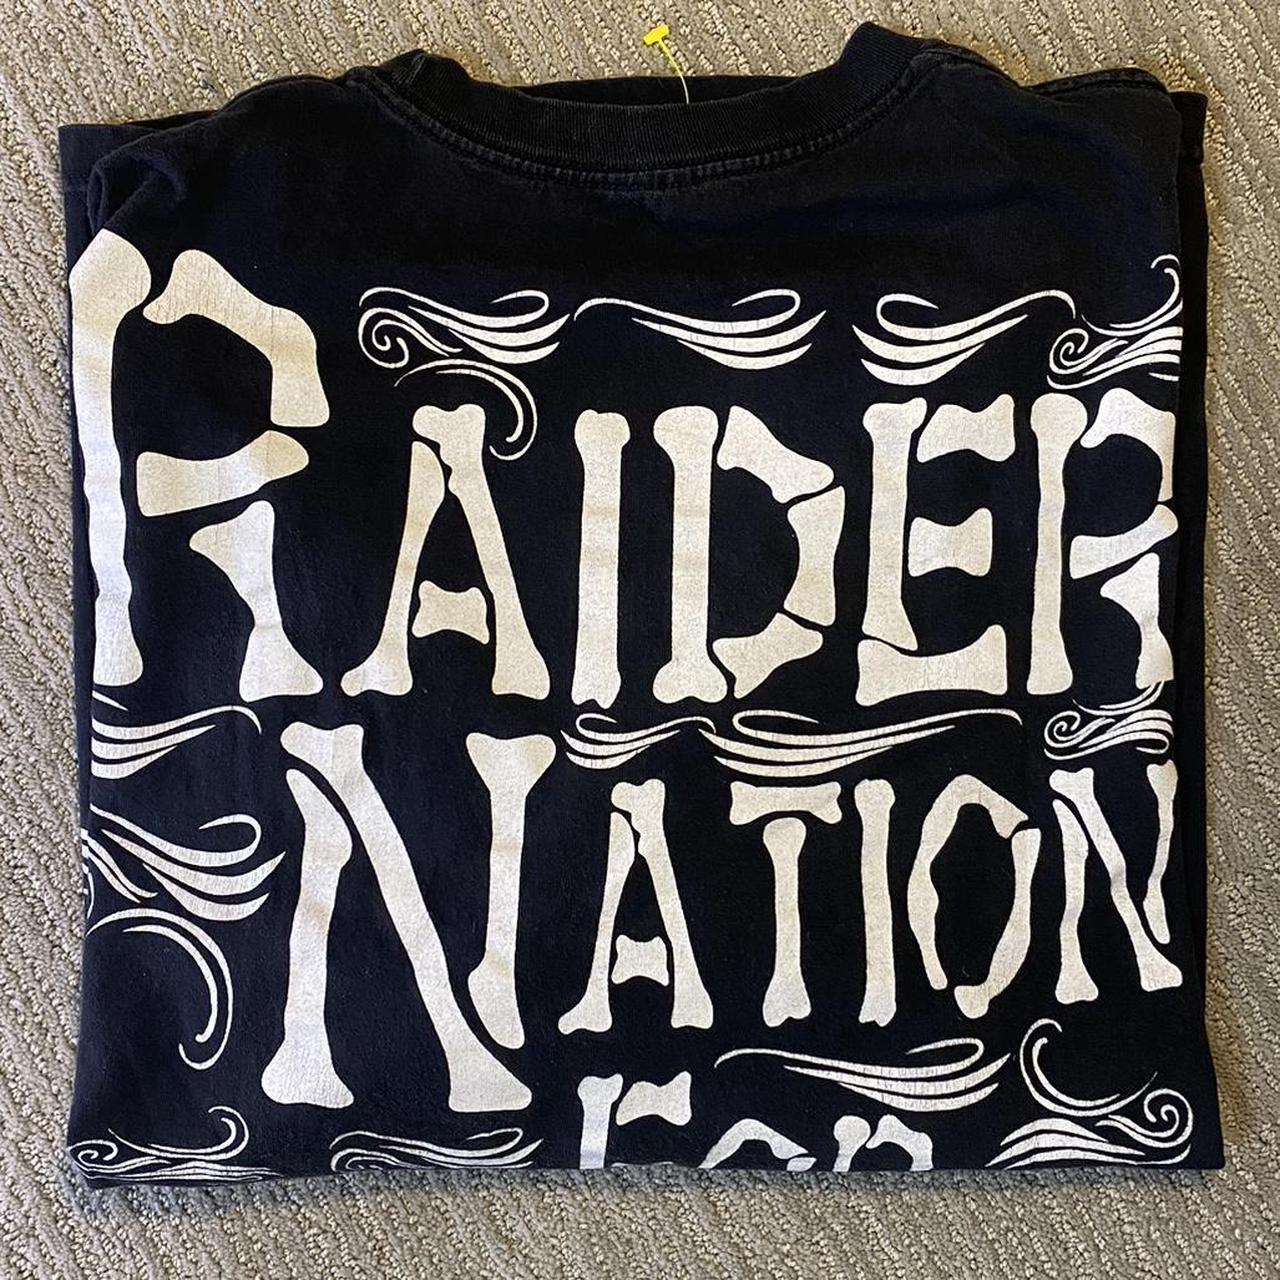 Oakland Raiders Vintage Raider Nation Shirt - T-shirts Low Price